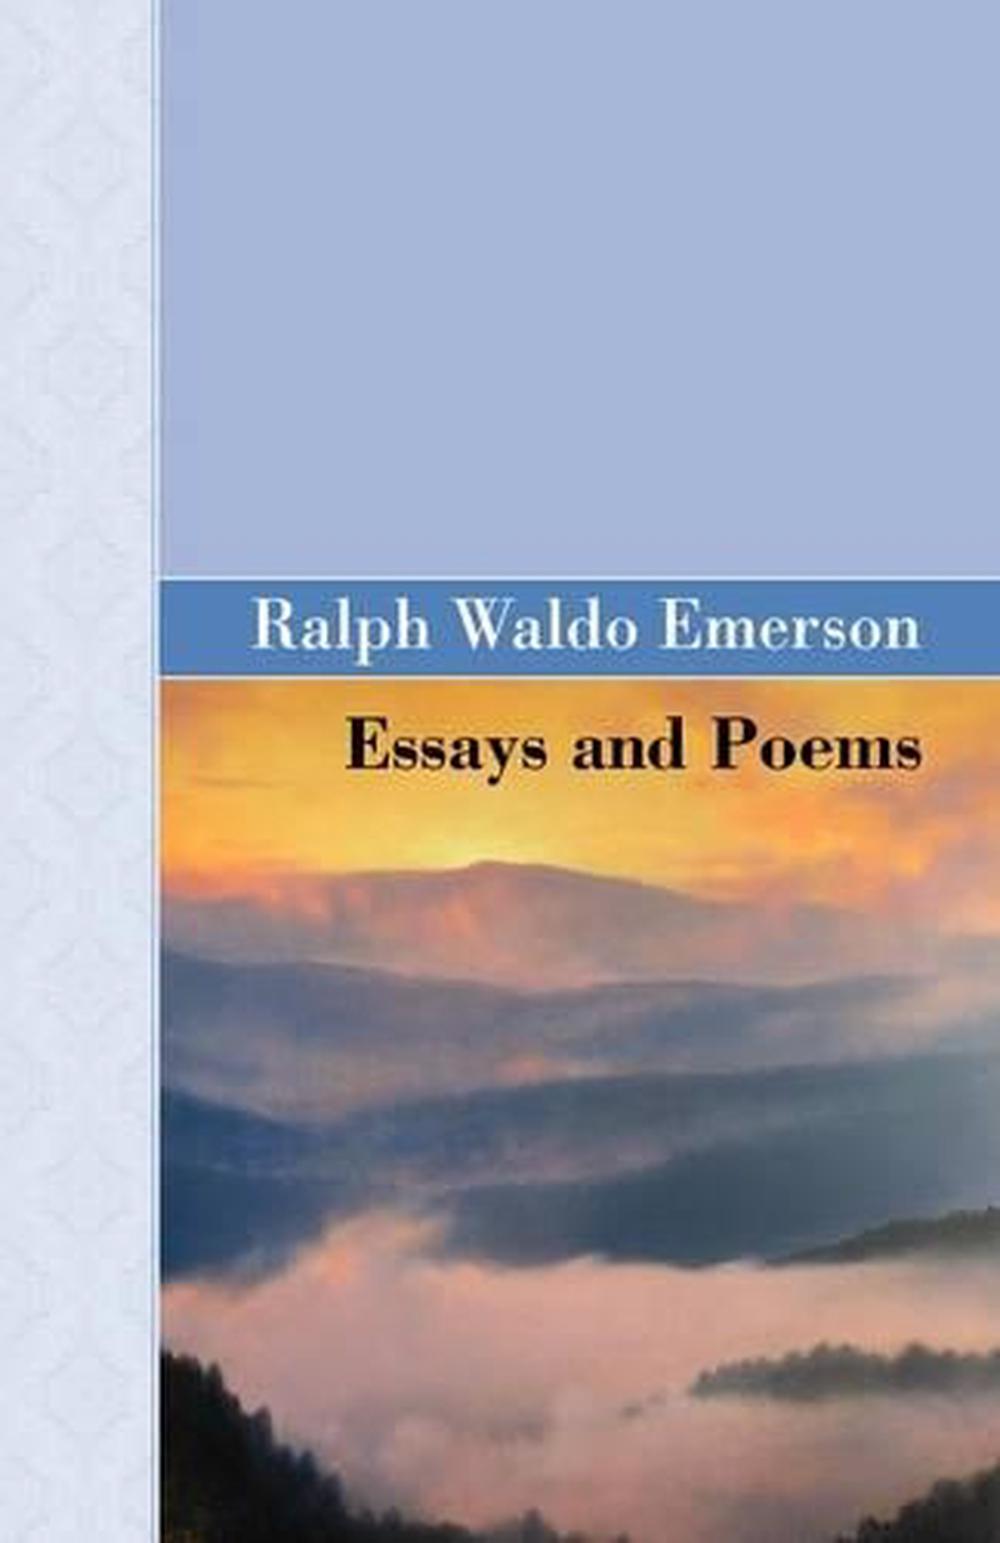 essays and poems by ralph waldo emerson pdf